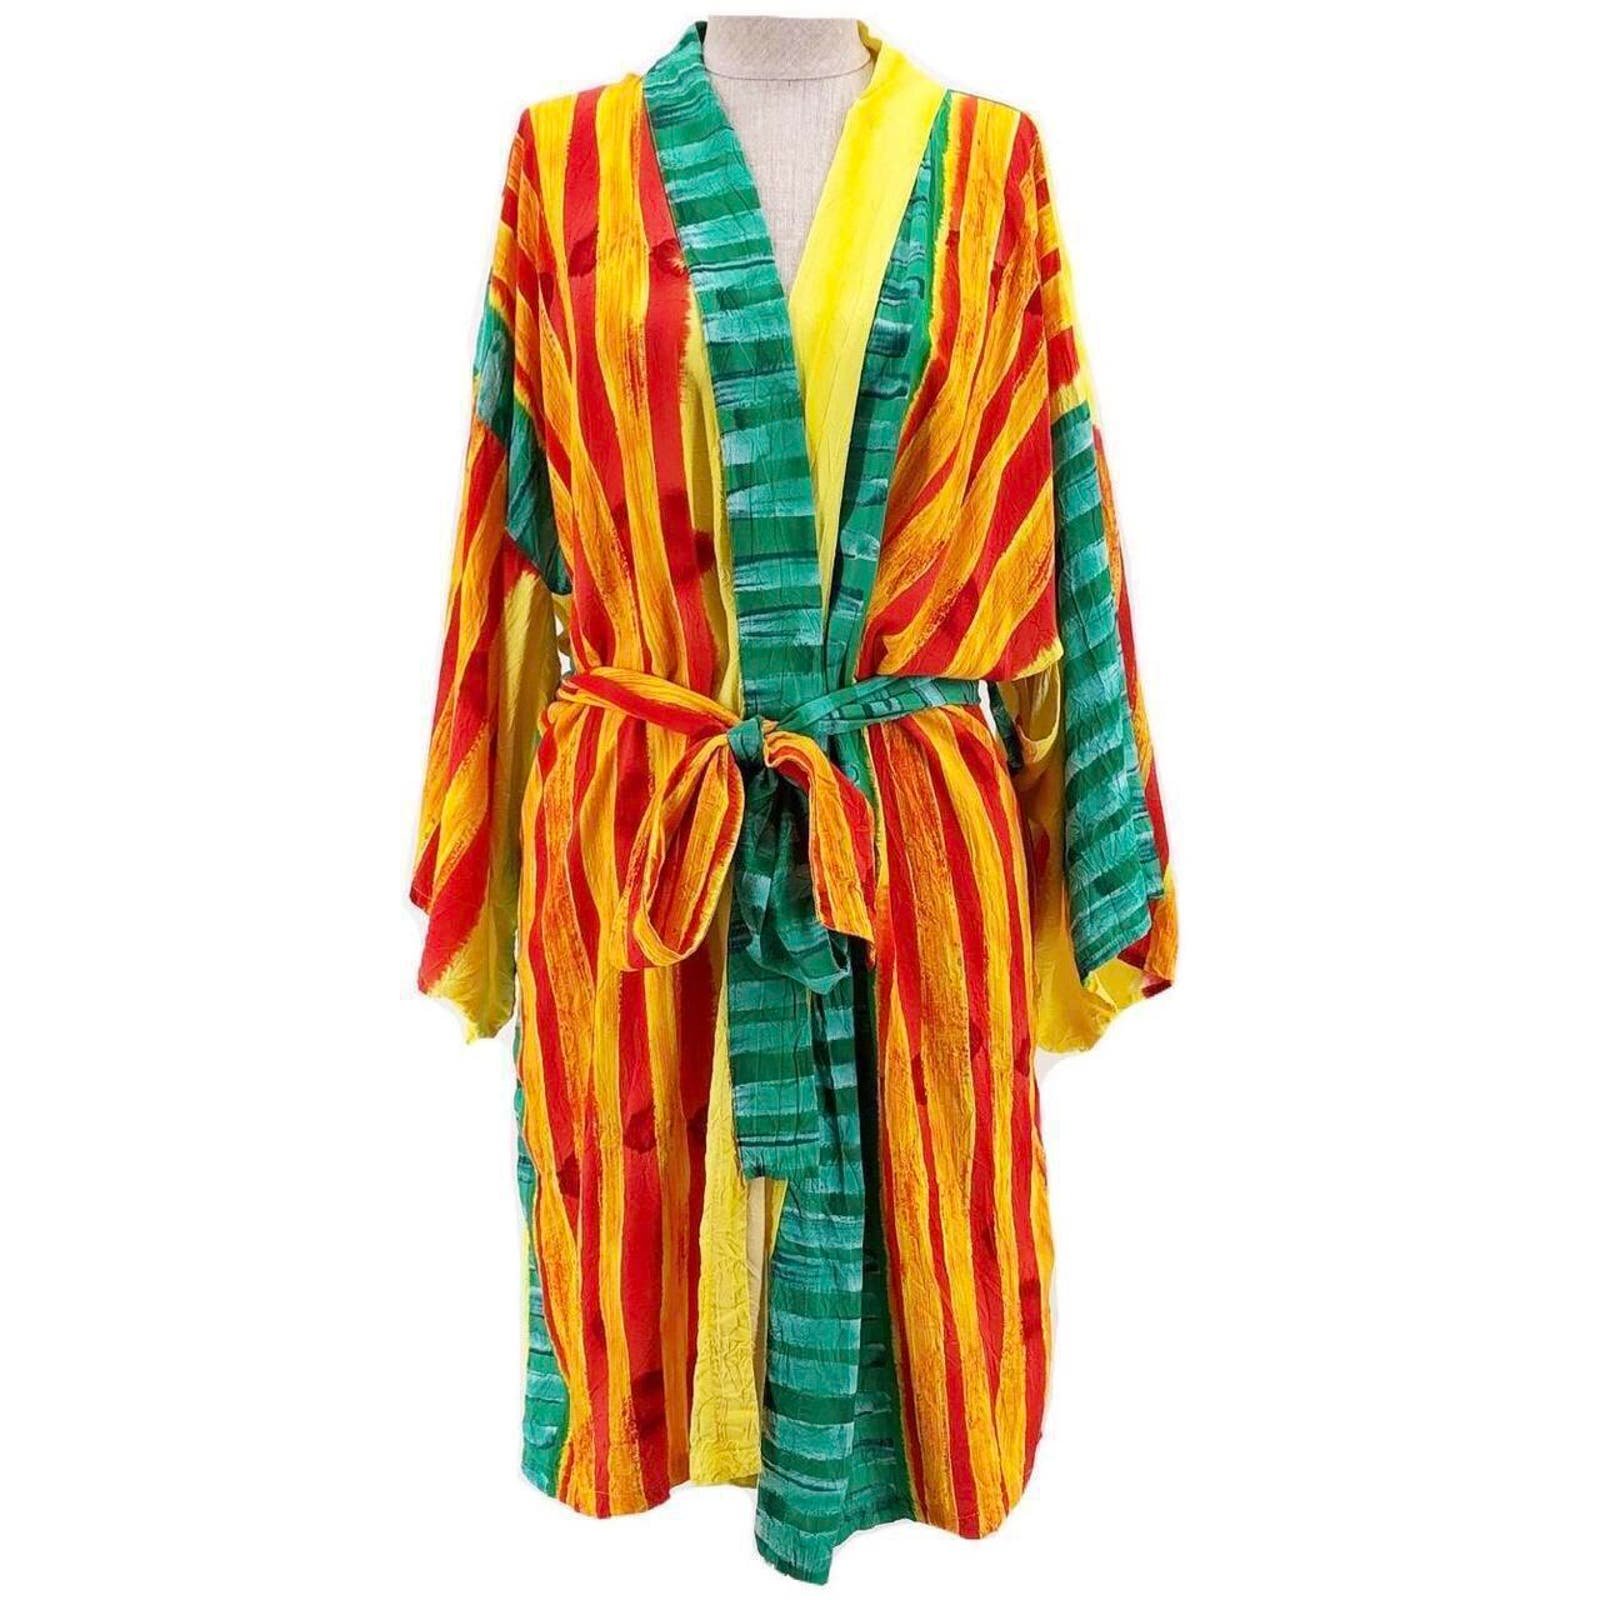 90s Jams World kimono robe 1990s vintage a59tVd3OP